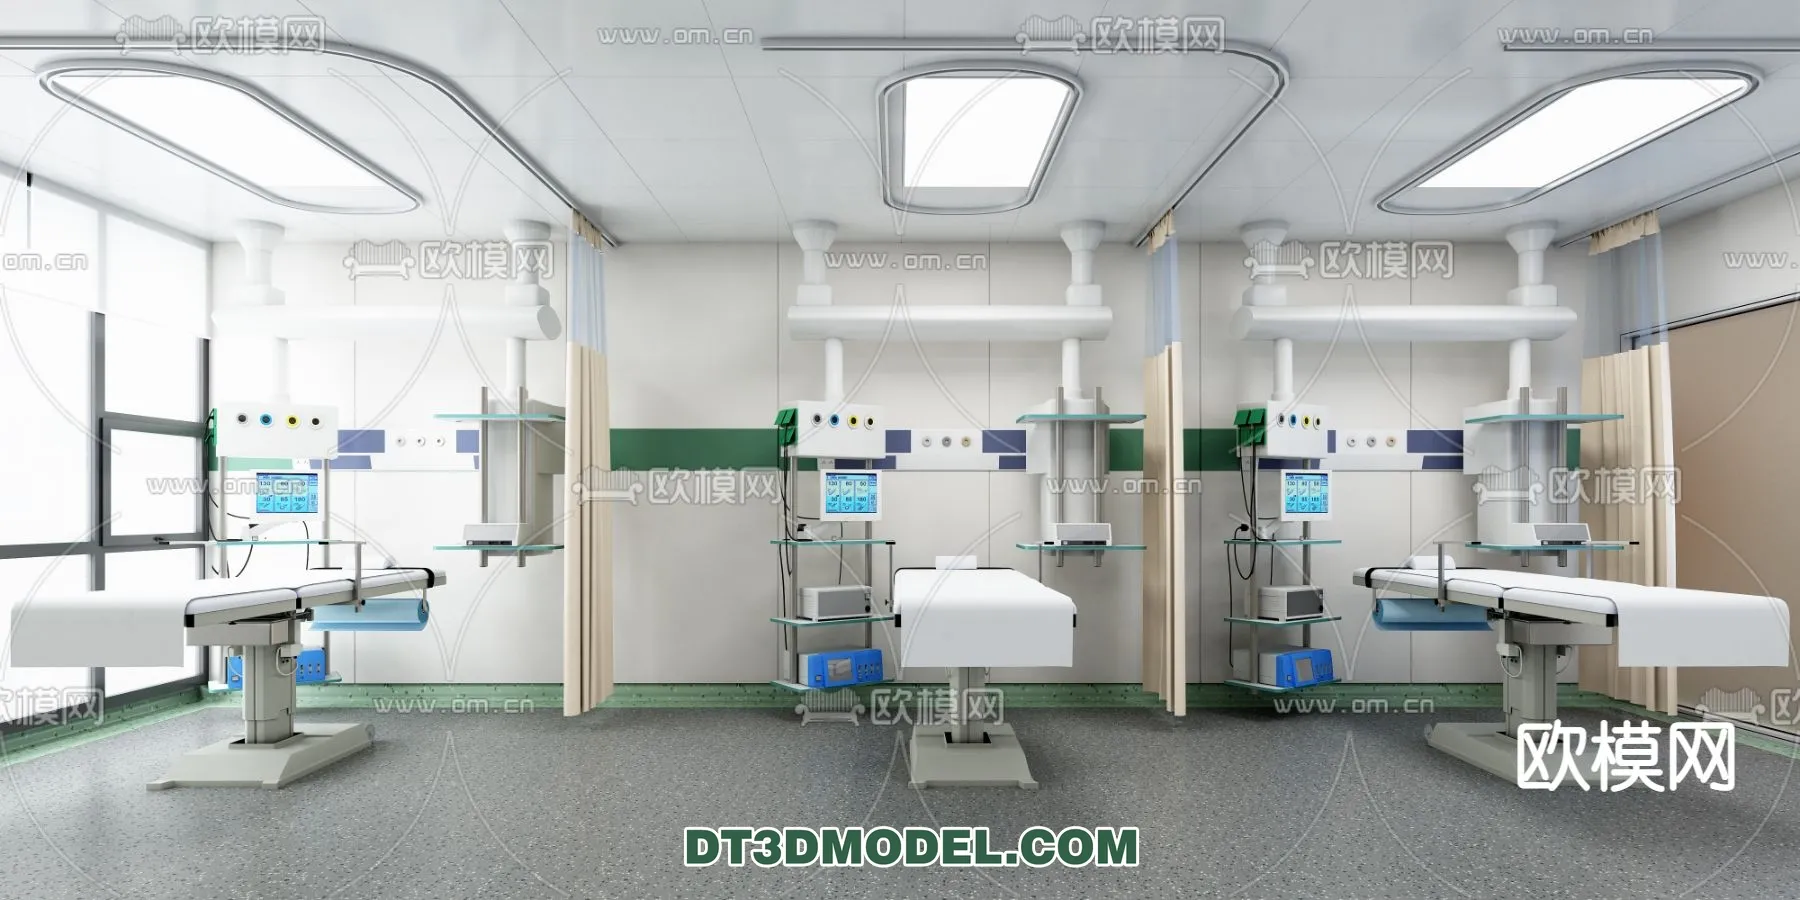 HOSPITAL 3D SCENES – MODERN – 0076